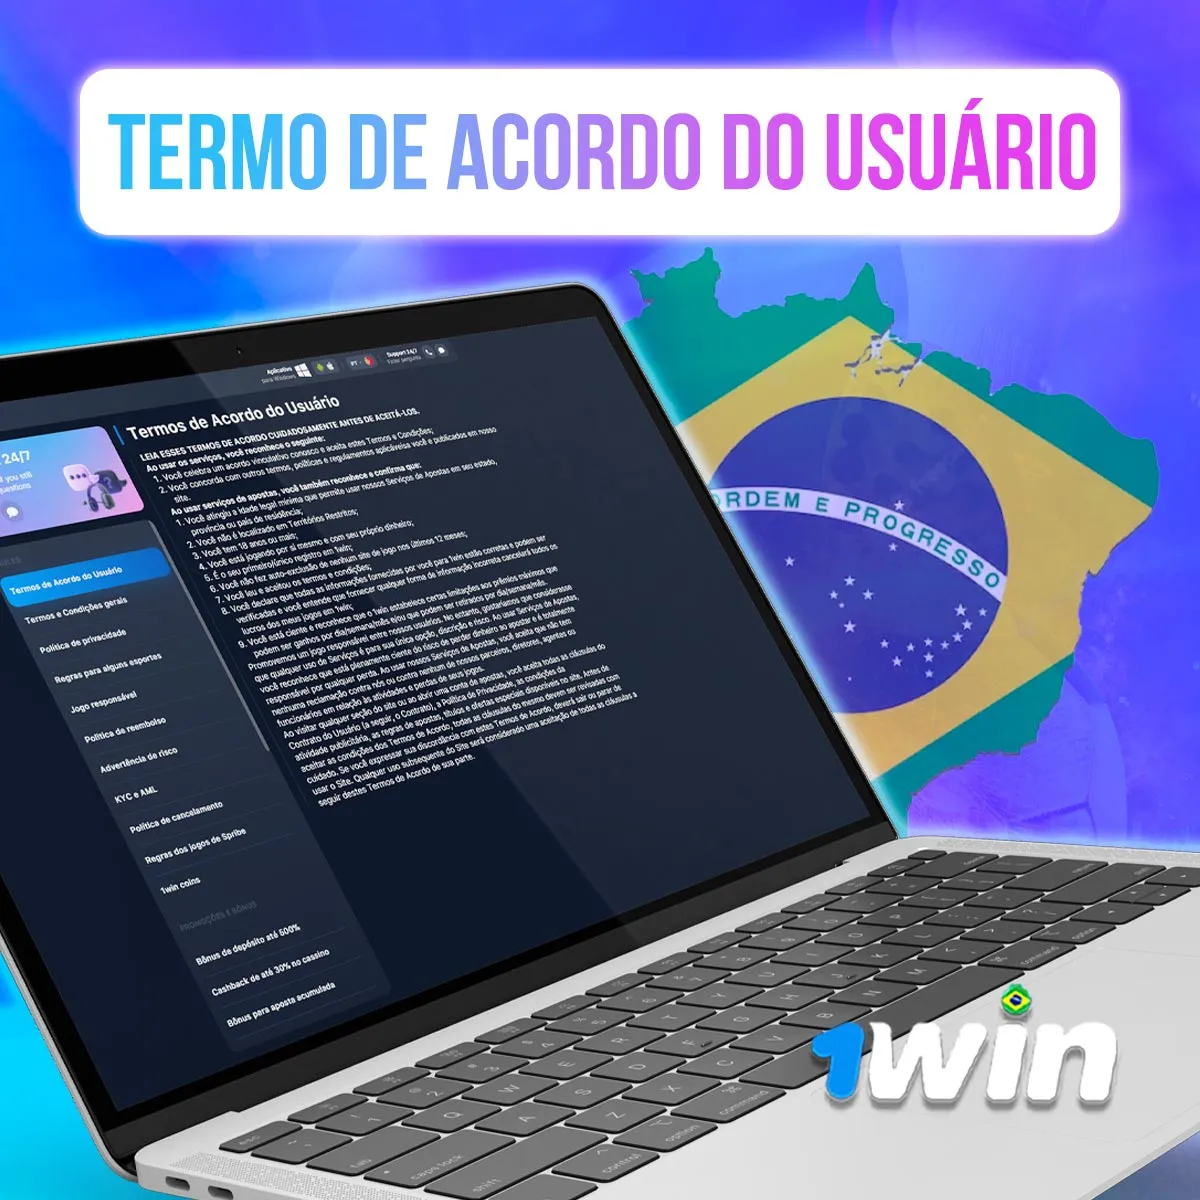 Termo de Acordo do Usuário da 1win no mercado brasileiro